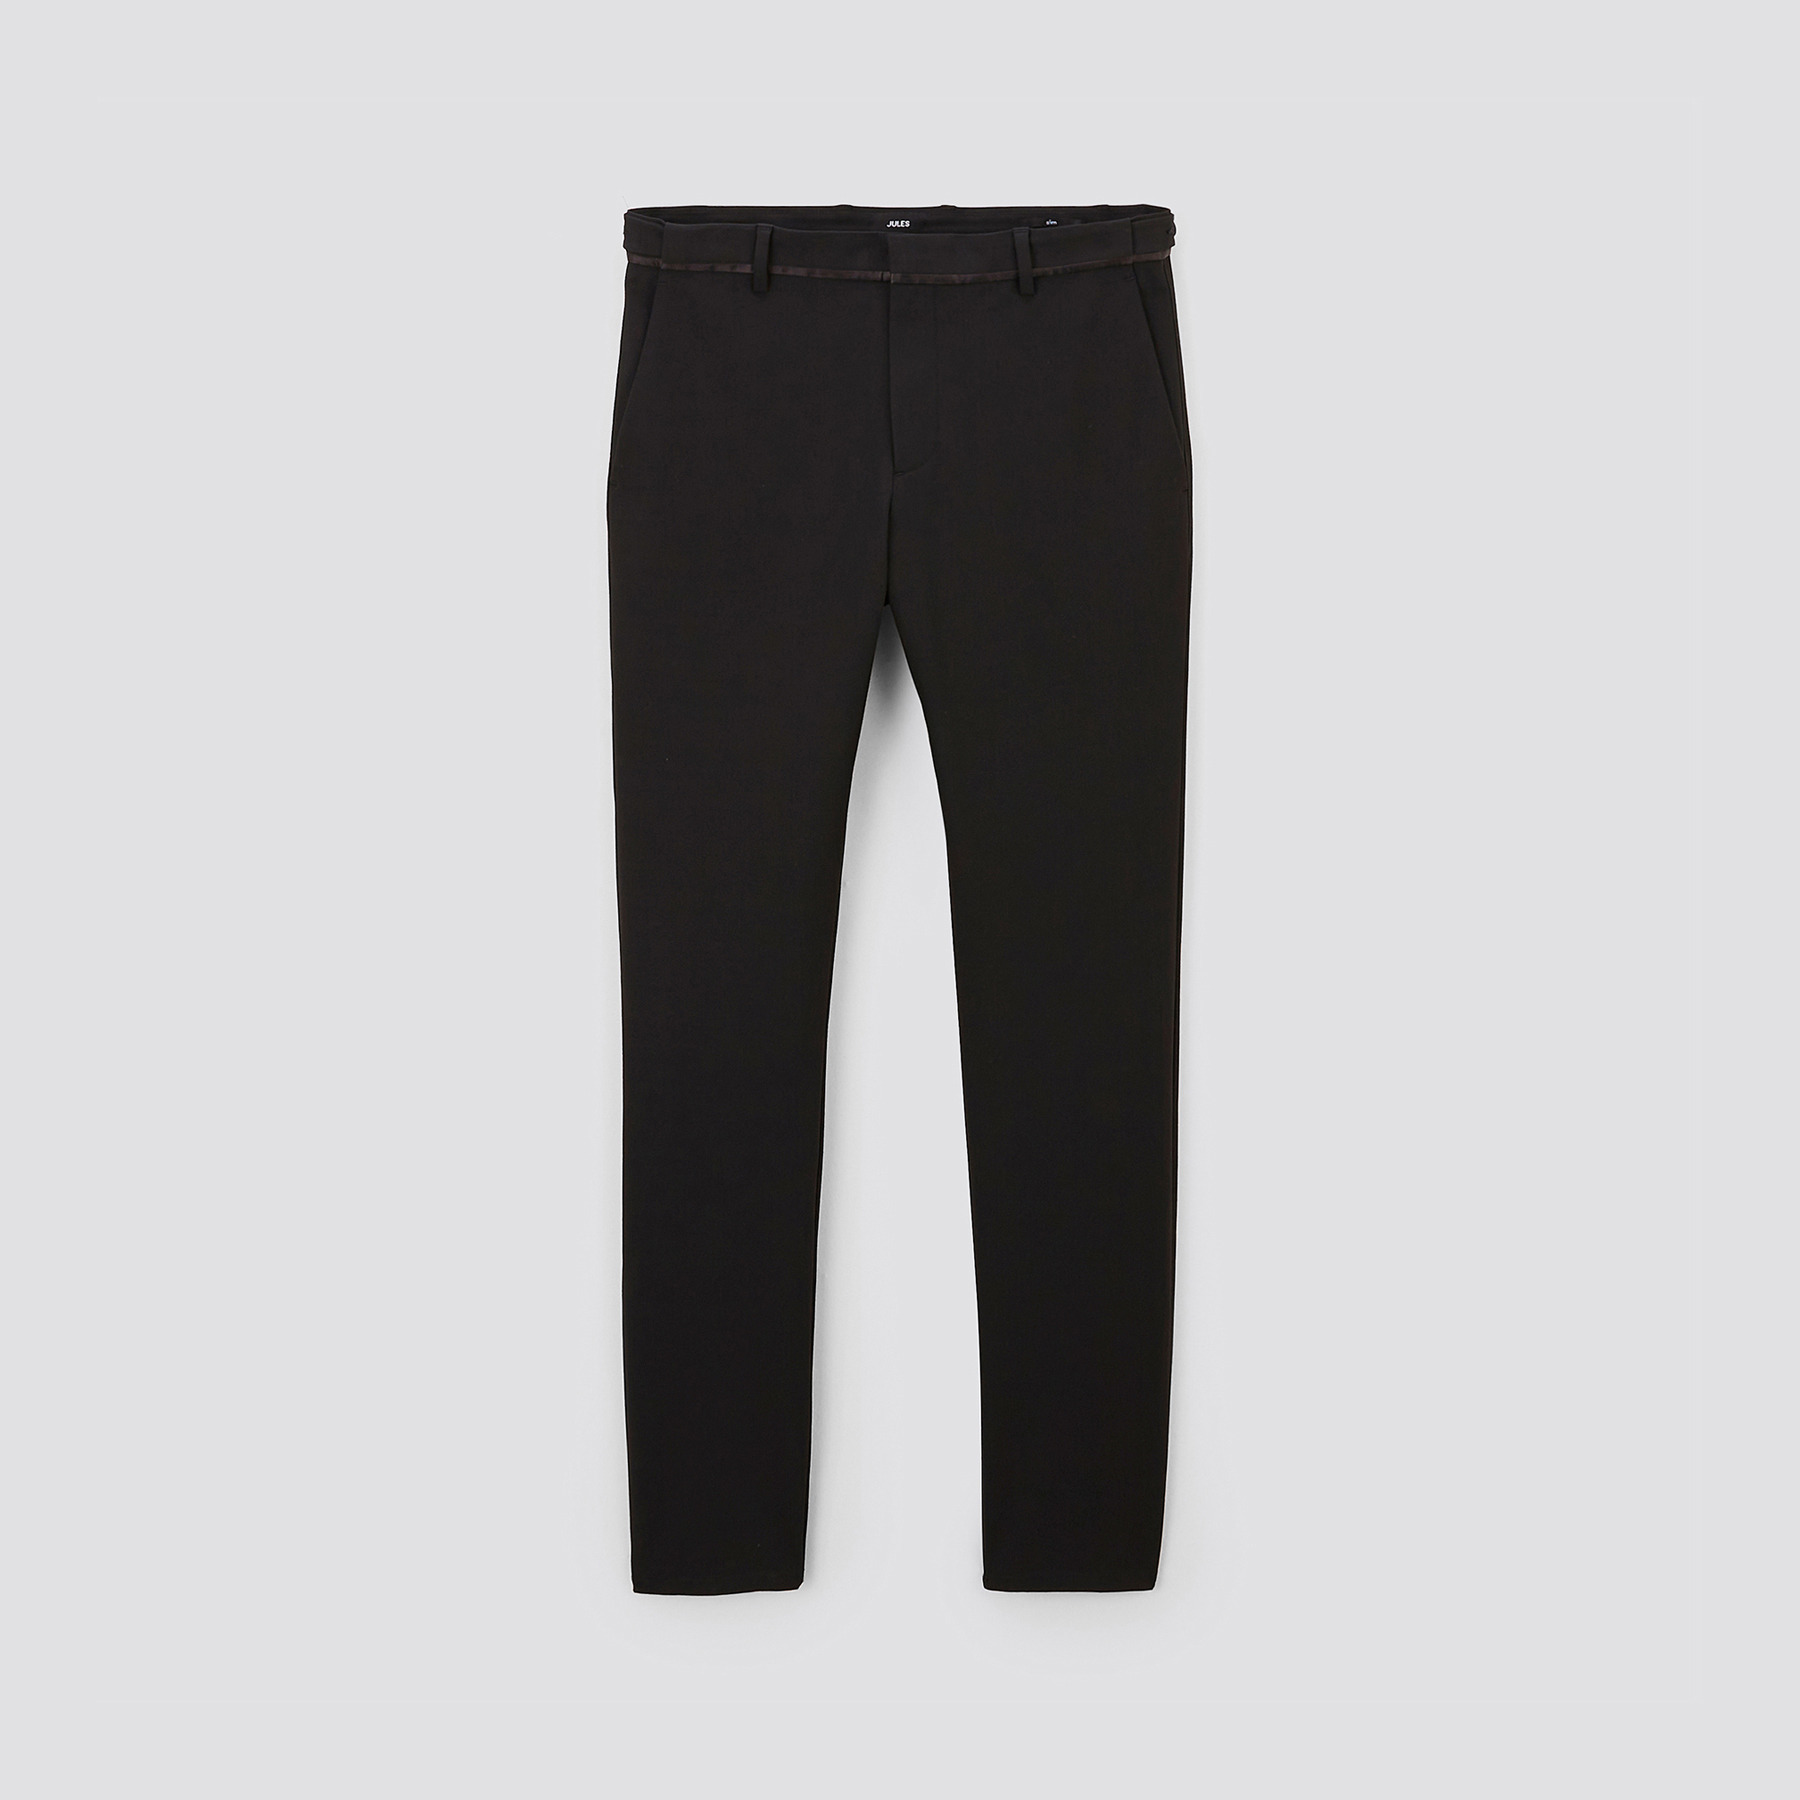 Pantalon clean sape Noir 38 63% Polyester, 31% Viscose, 6% Elasthanne Homme Jules